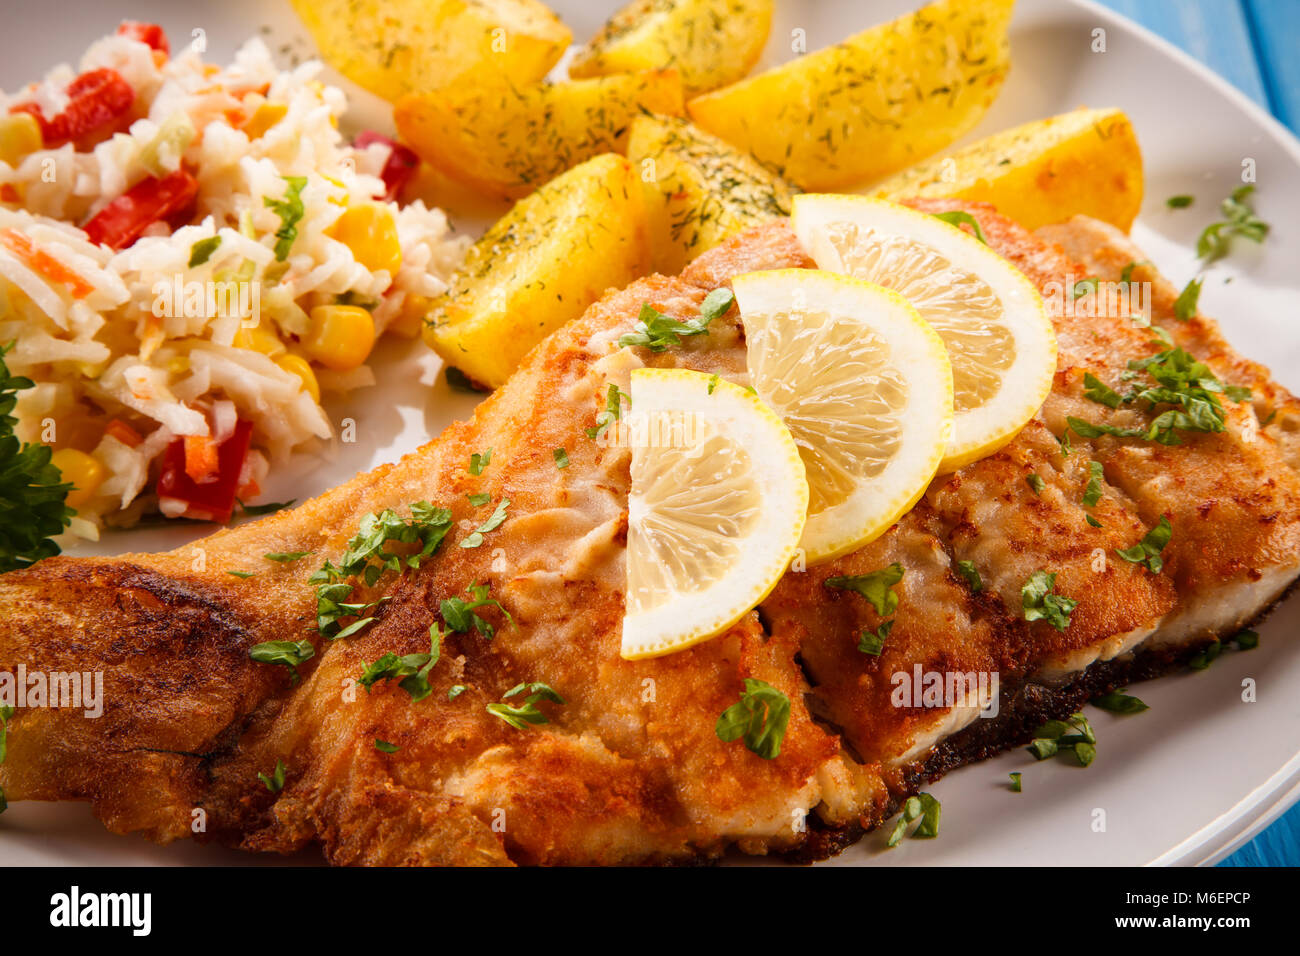 Fish dish - fried fish with potatoes Stock Photo